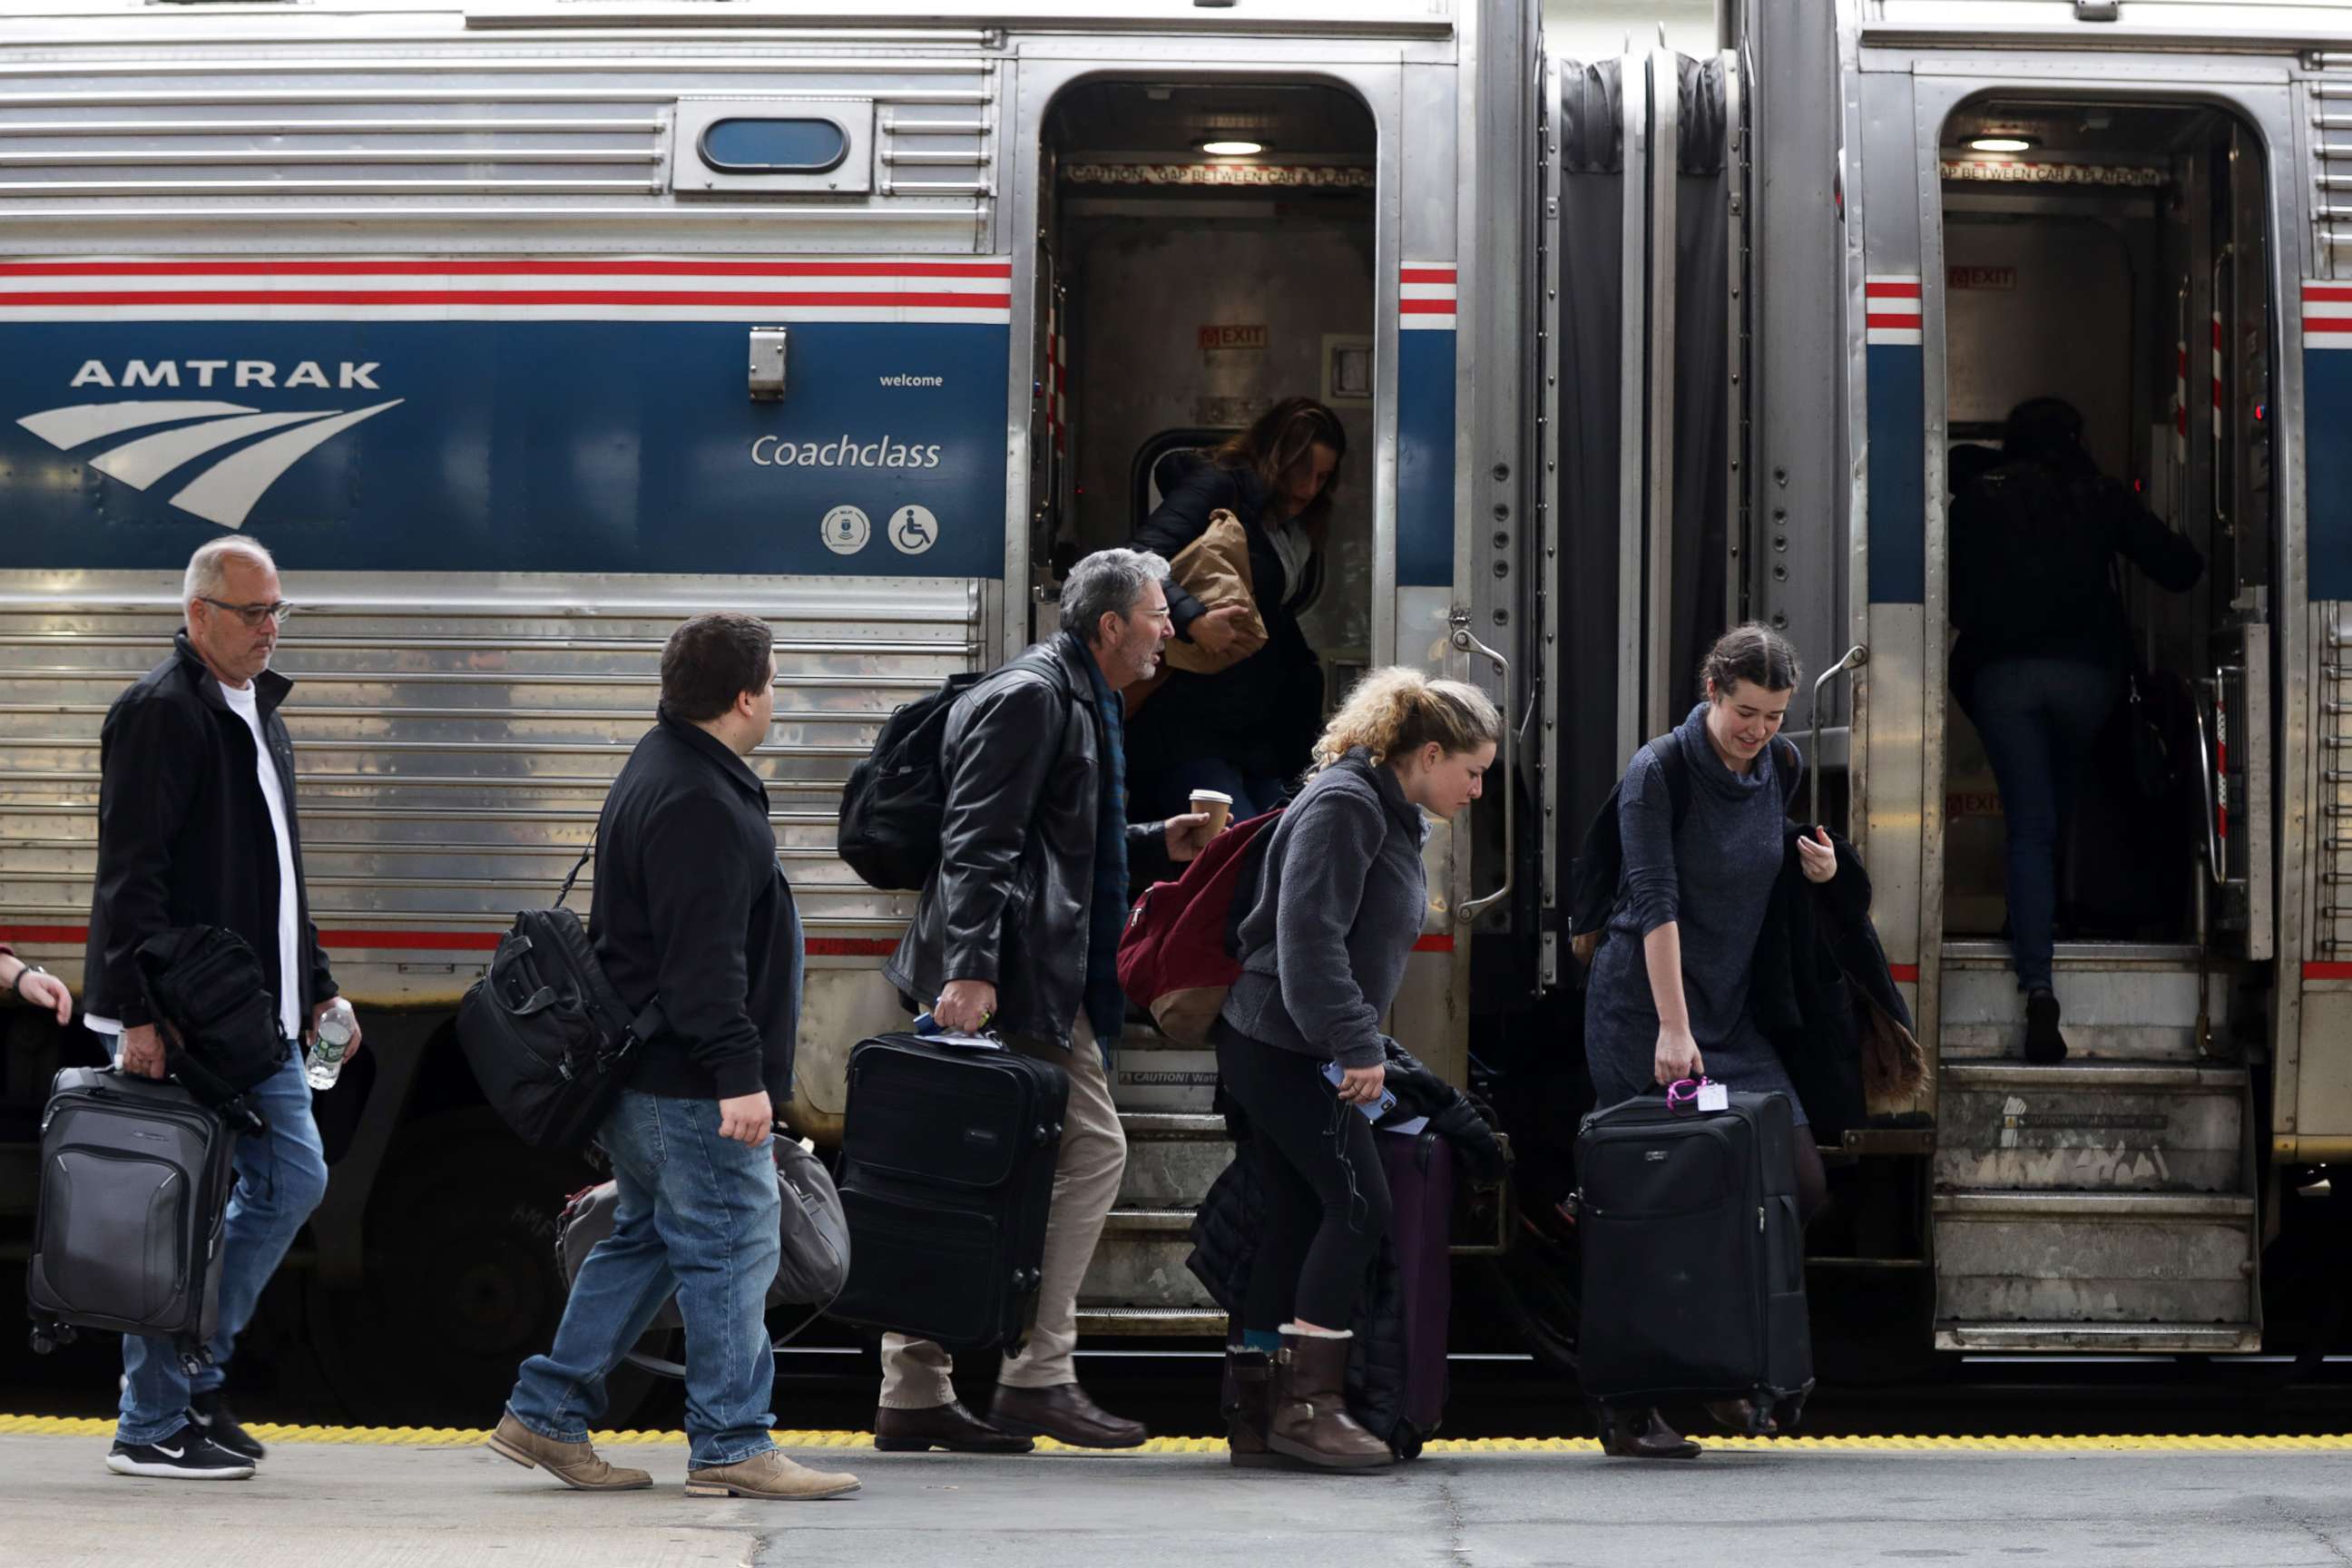 PHOTO:Passengers wait to board an Amtrak train Nov. 27, 2019 at Union Station in Washington, D.C.